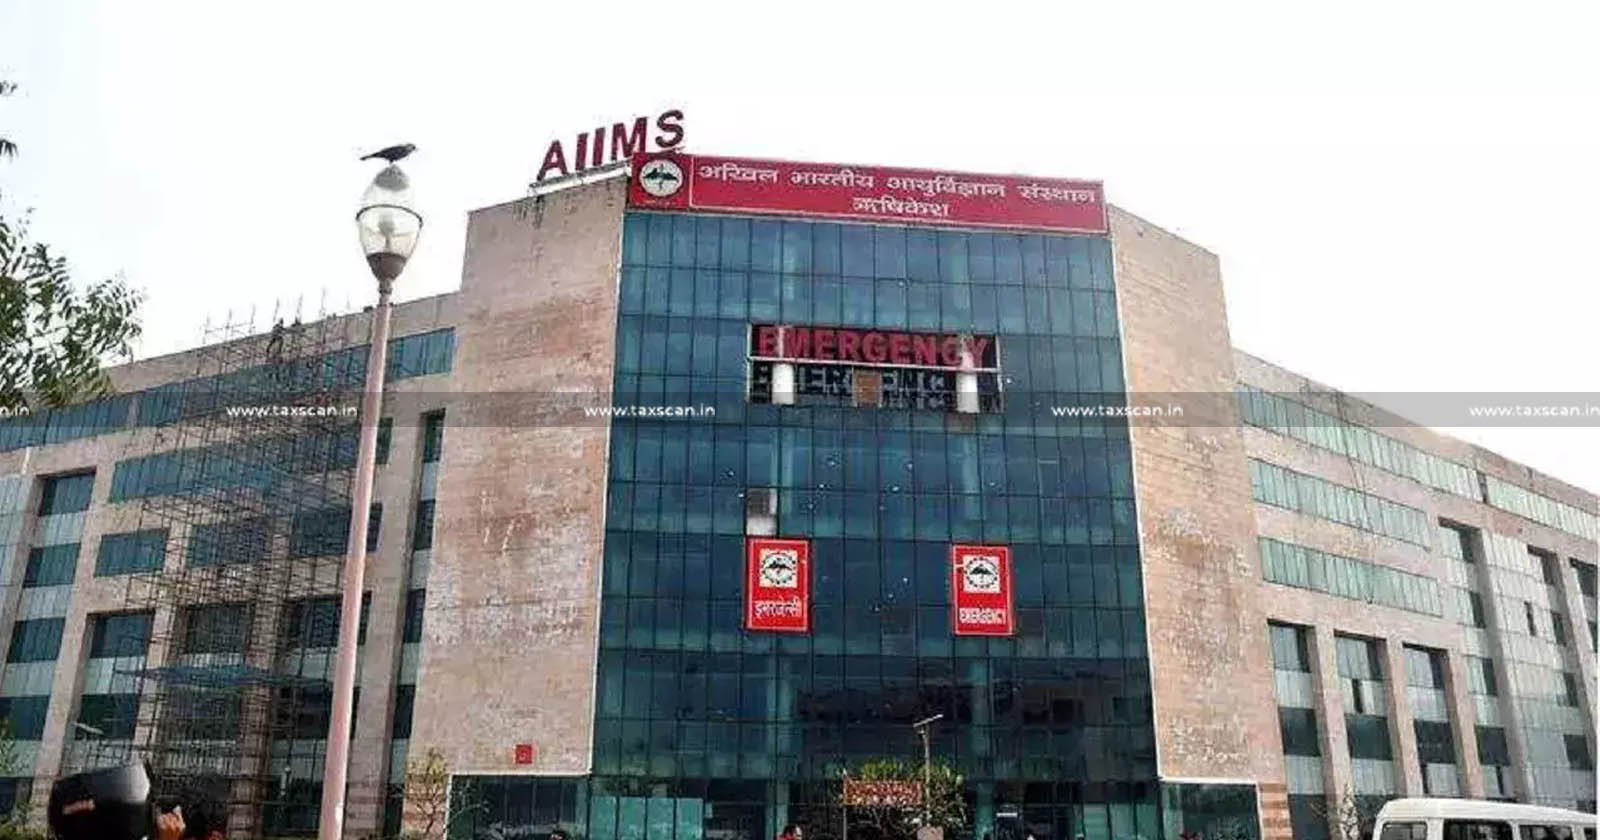 GST - AAR Telangana - AIIMS - All India Institute of Medical Sciences - taxscan